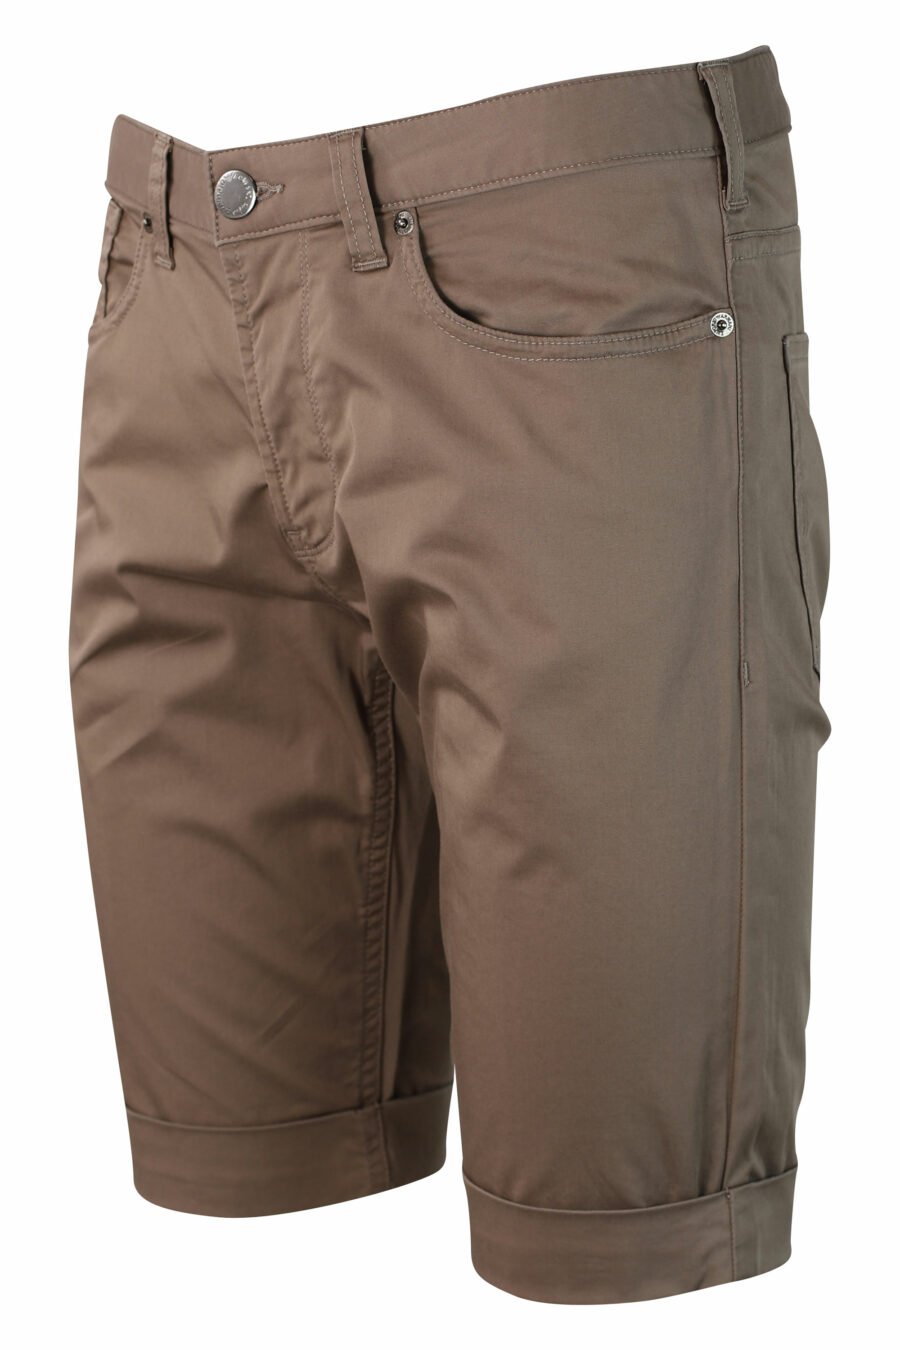 Beigefarbene Shorts mit Mini-Logo - IMG 9903 1